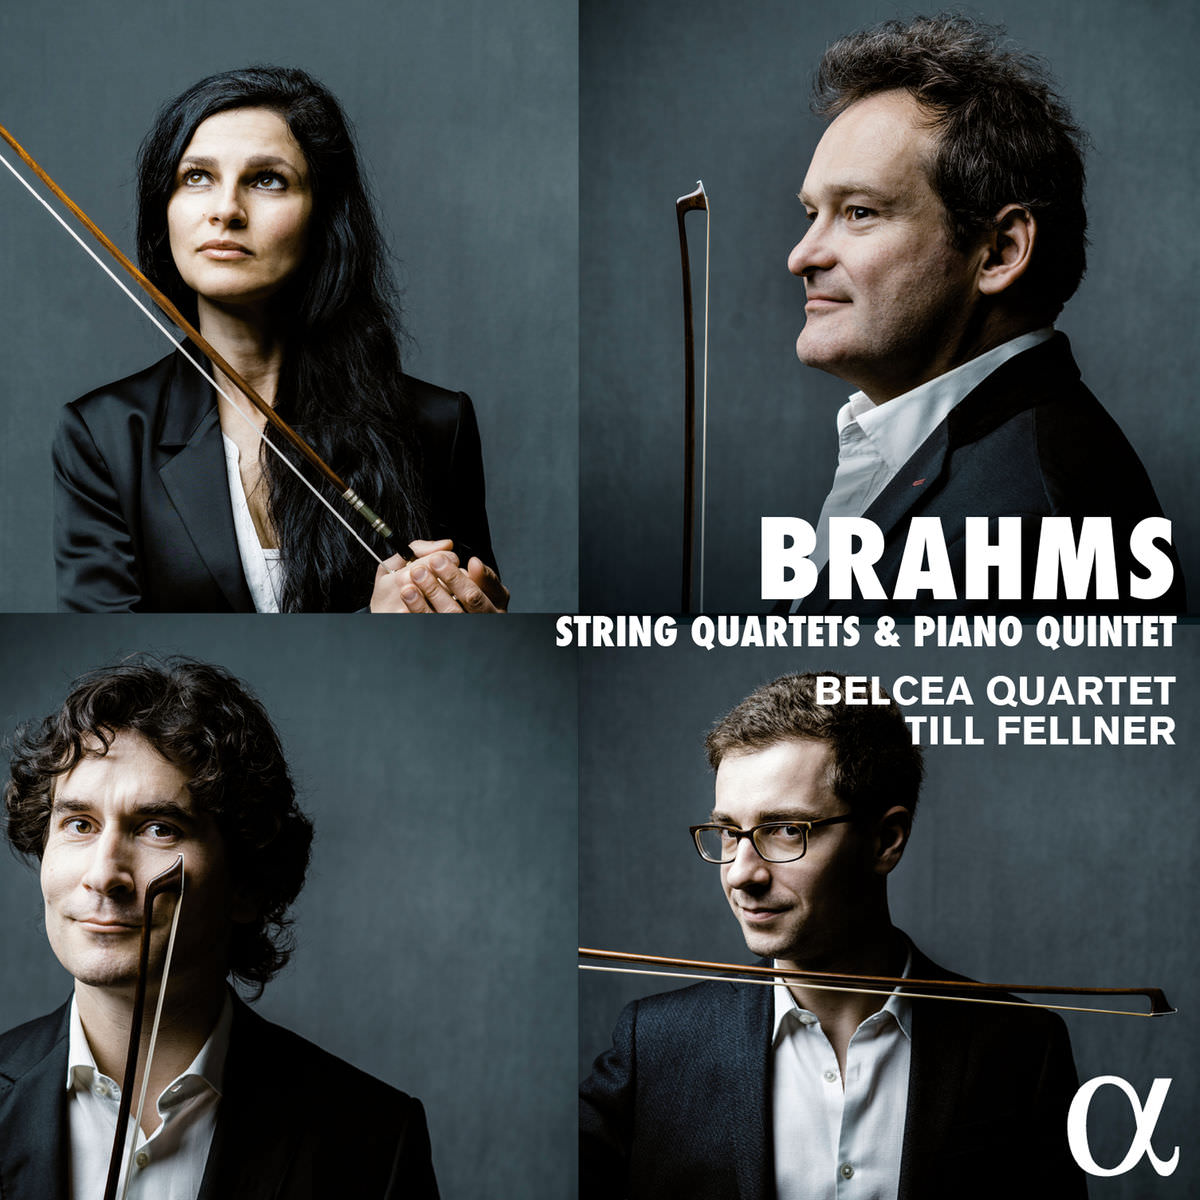 Belcea Quartet & Till Fellner – Brahms: String Quartets & Piano Quintet (2016) [FLAC 24bit/192kHz]